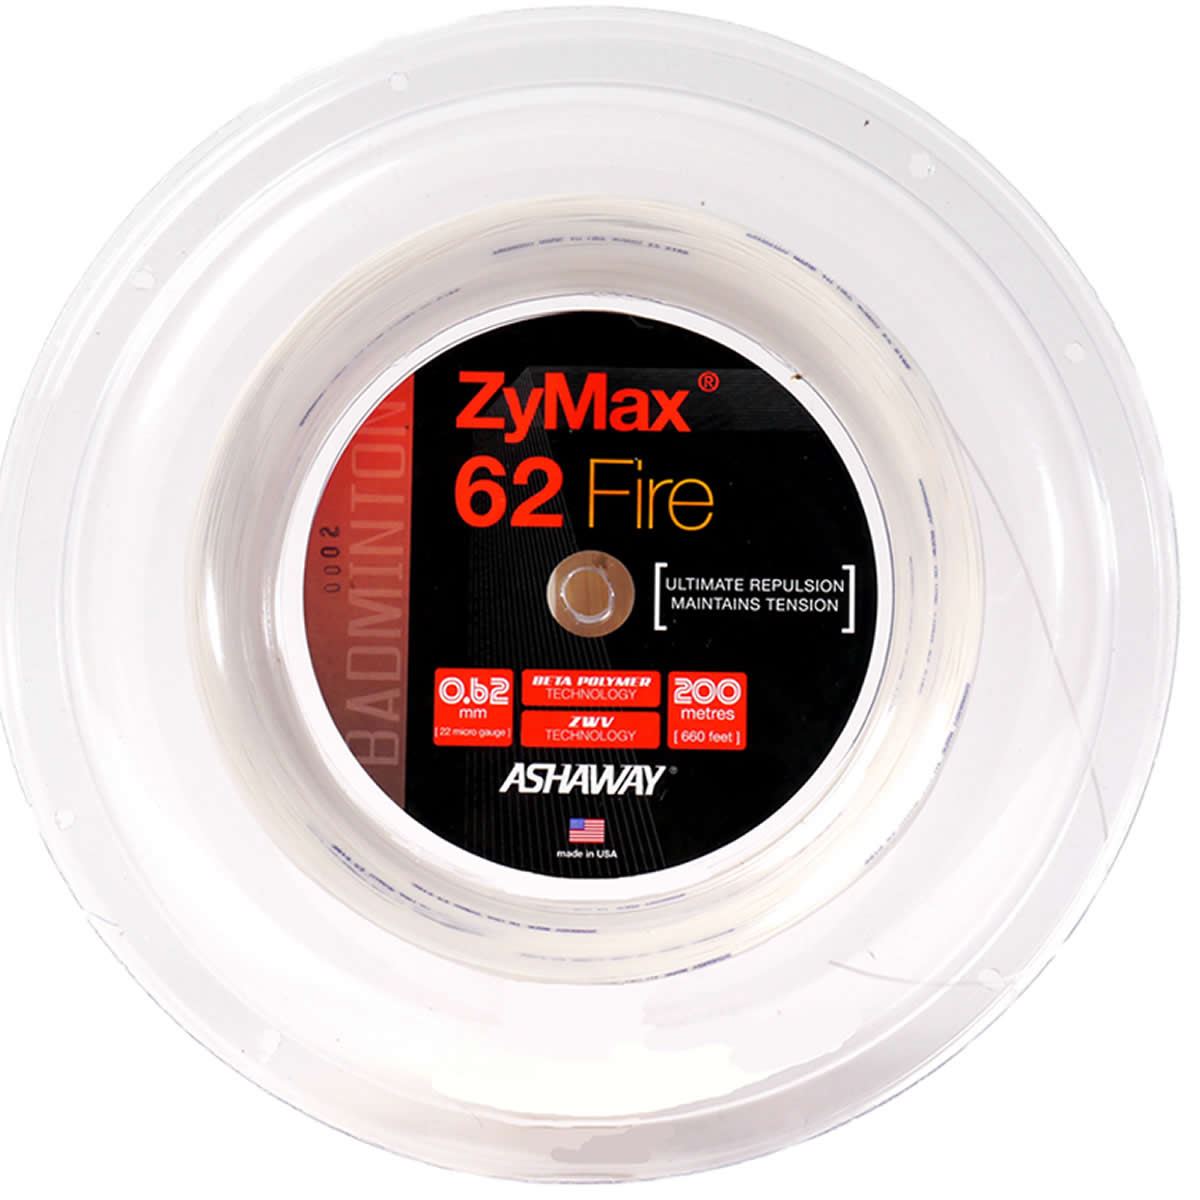 Ashaway Zymax 62 Fire Badminton String White  - 0.62MM - 200m Reel